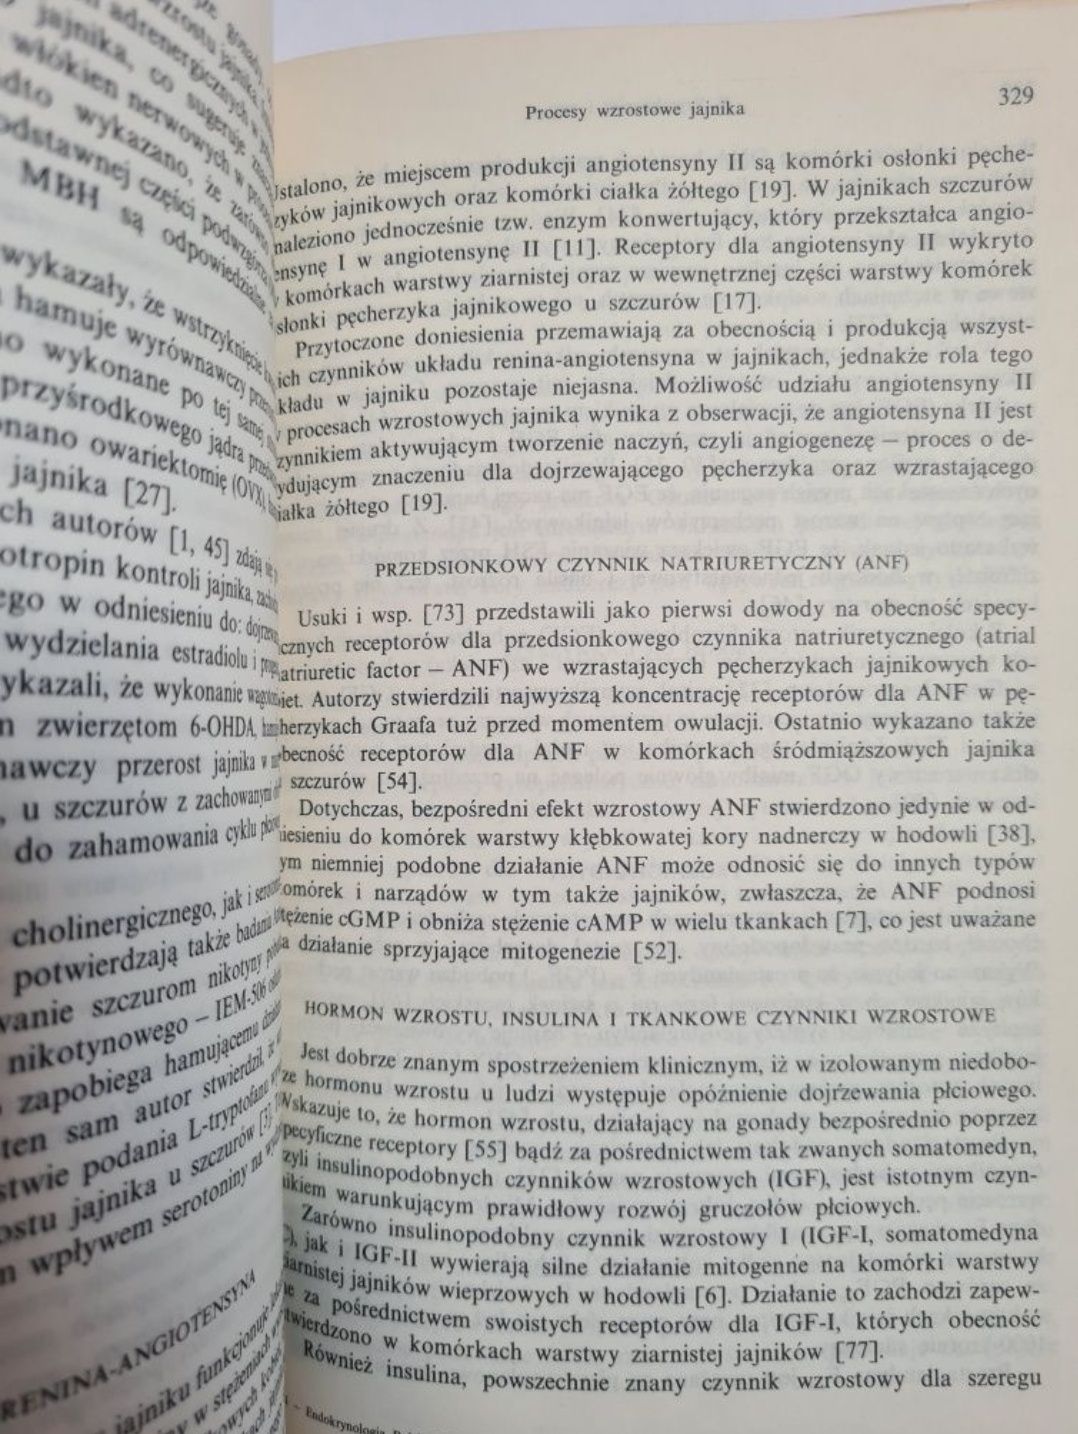 Endokrynologia polska - tom 40, zeszyt 6